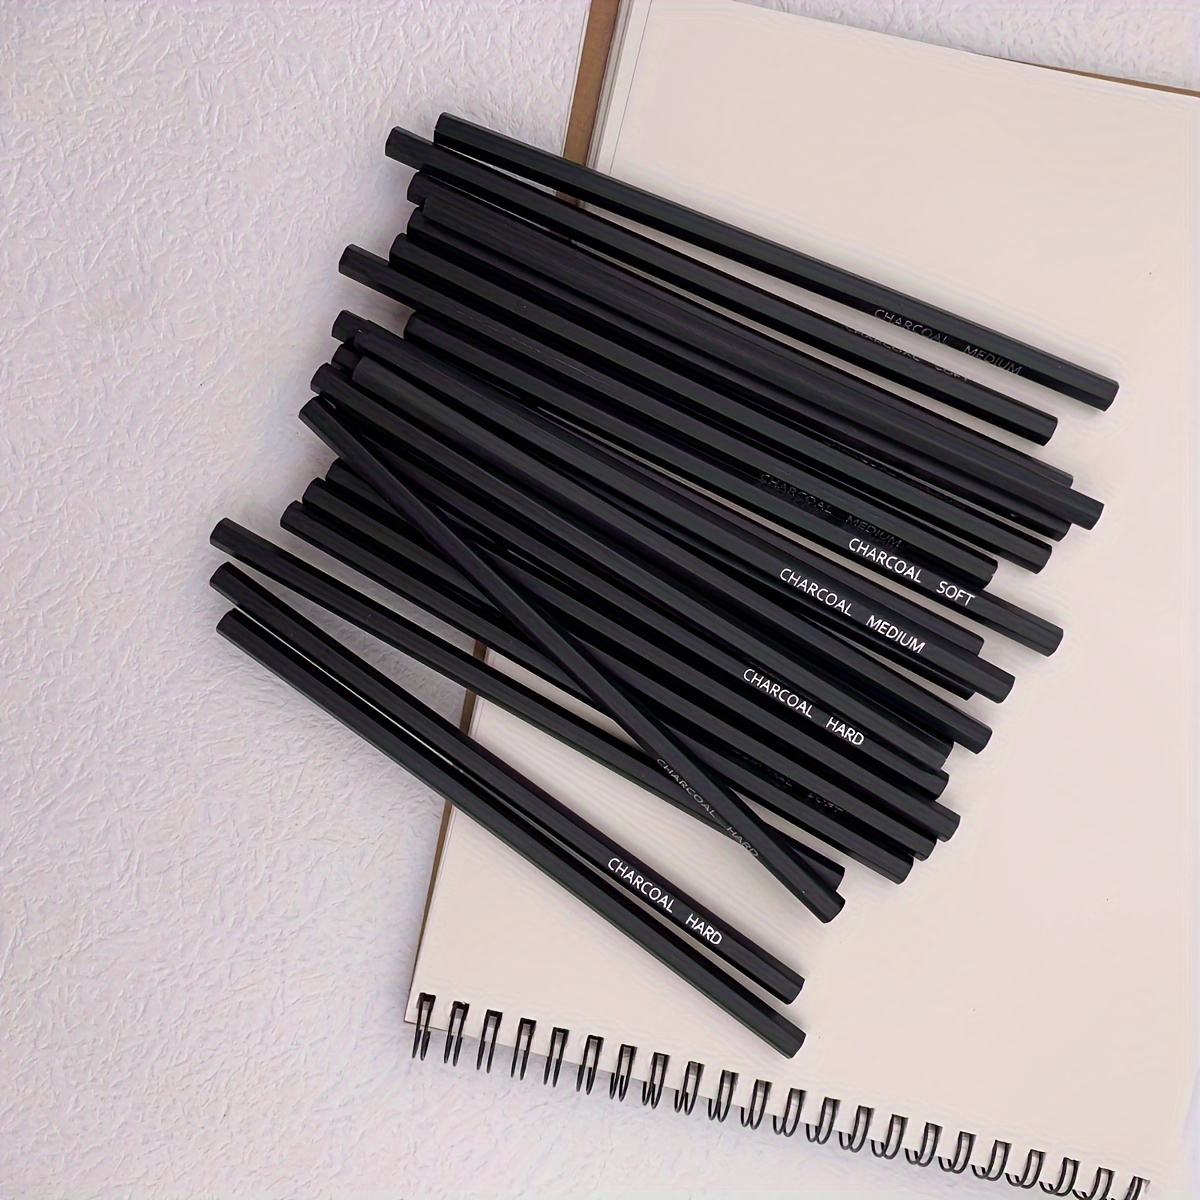 

12pcs Charcoal Pen Set (6pcs Soft Charcoal, 4pcs Medium Charcoal, 2pcs Hard Charcoal) Is Suitable For Sketching Art Creation And Drawing Design Drawings